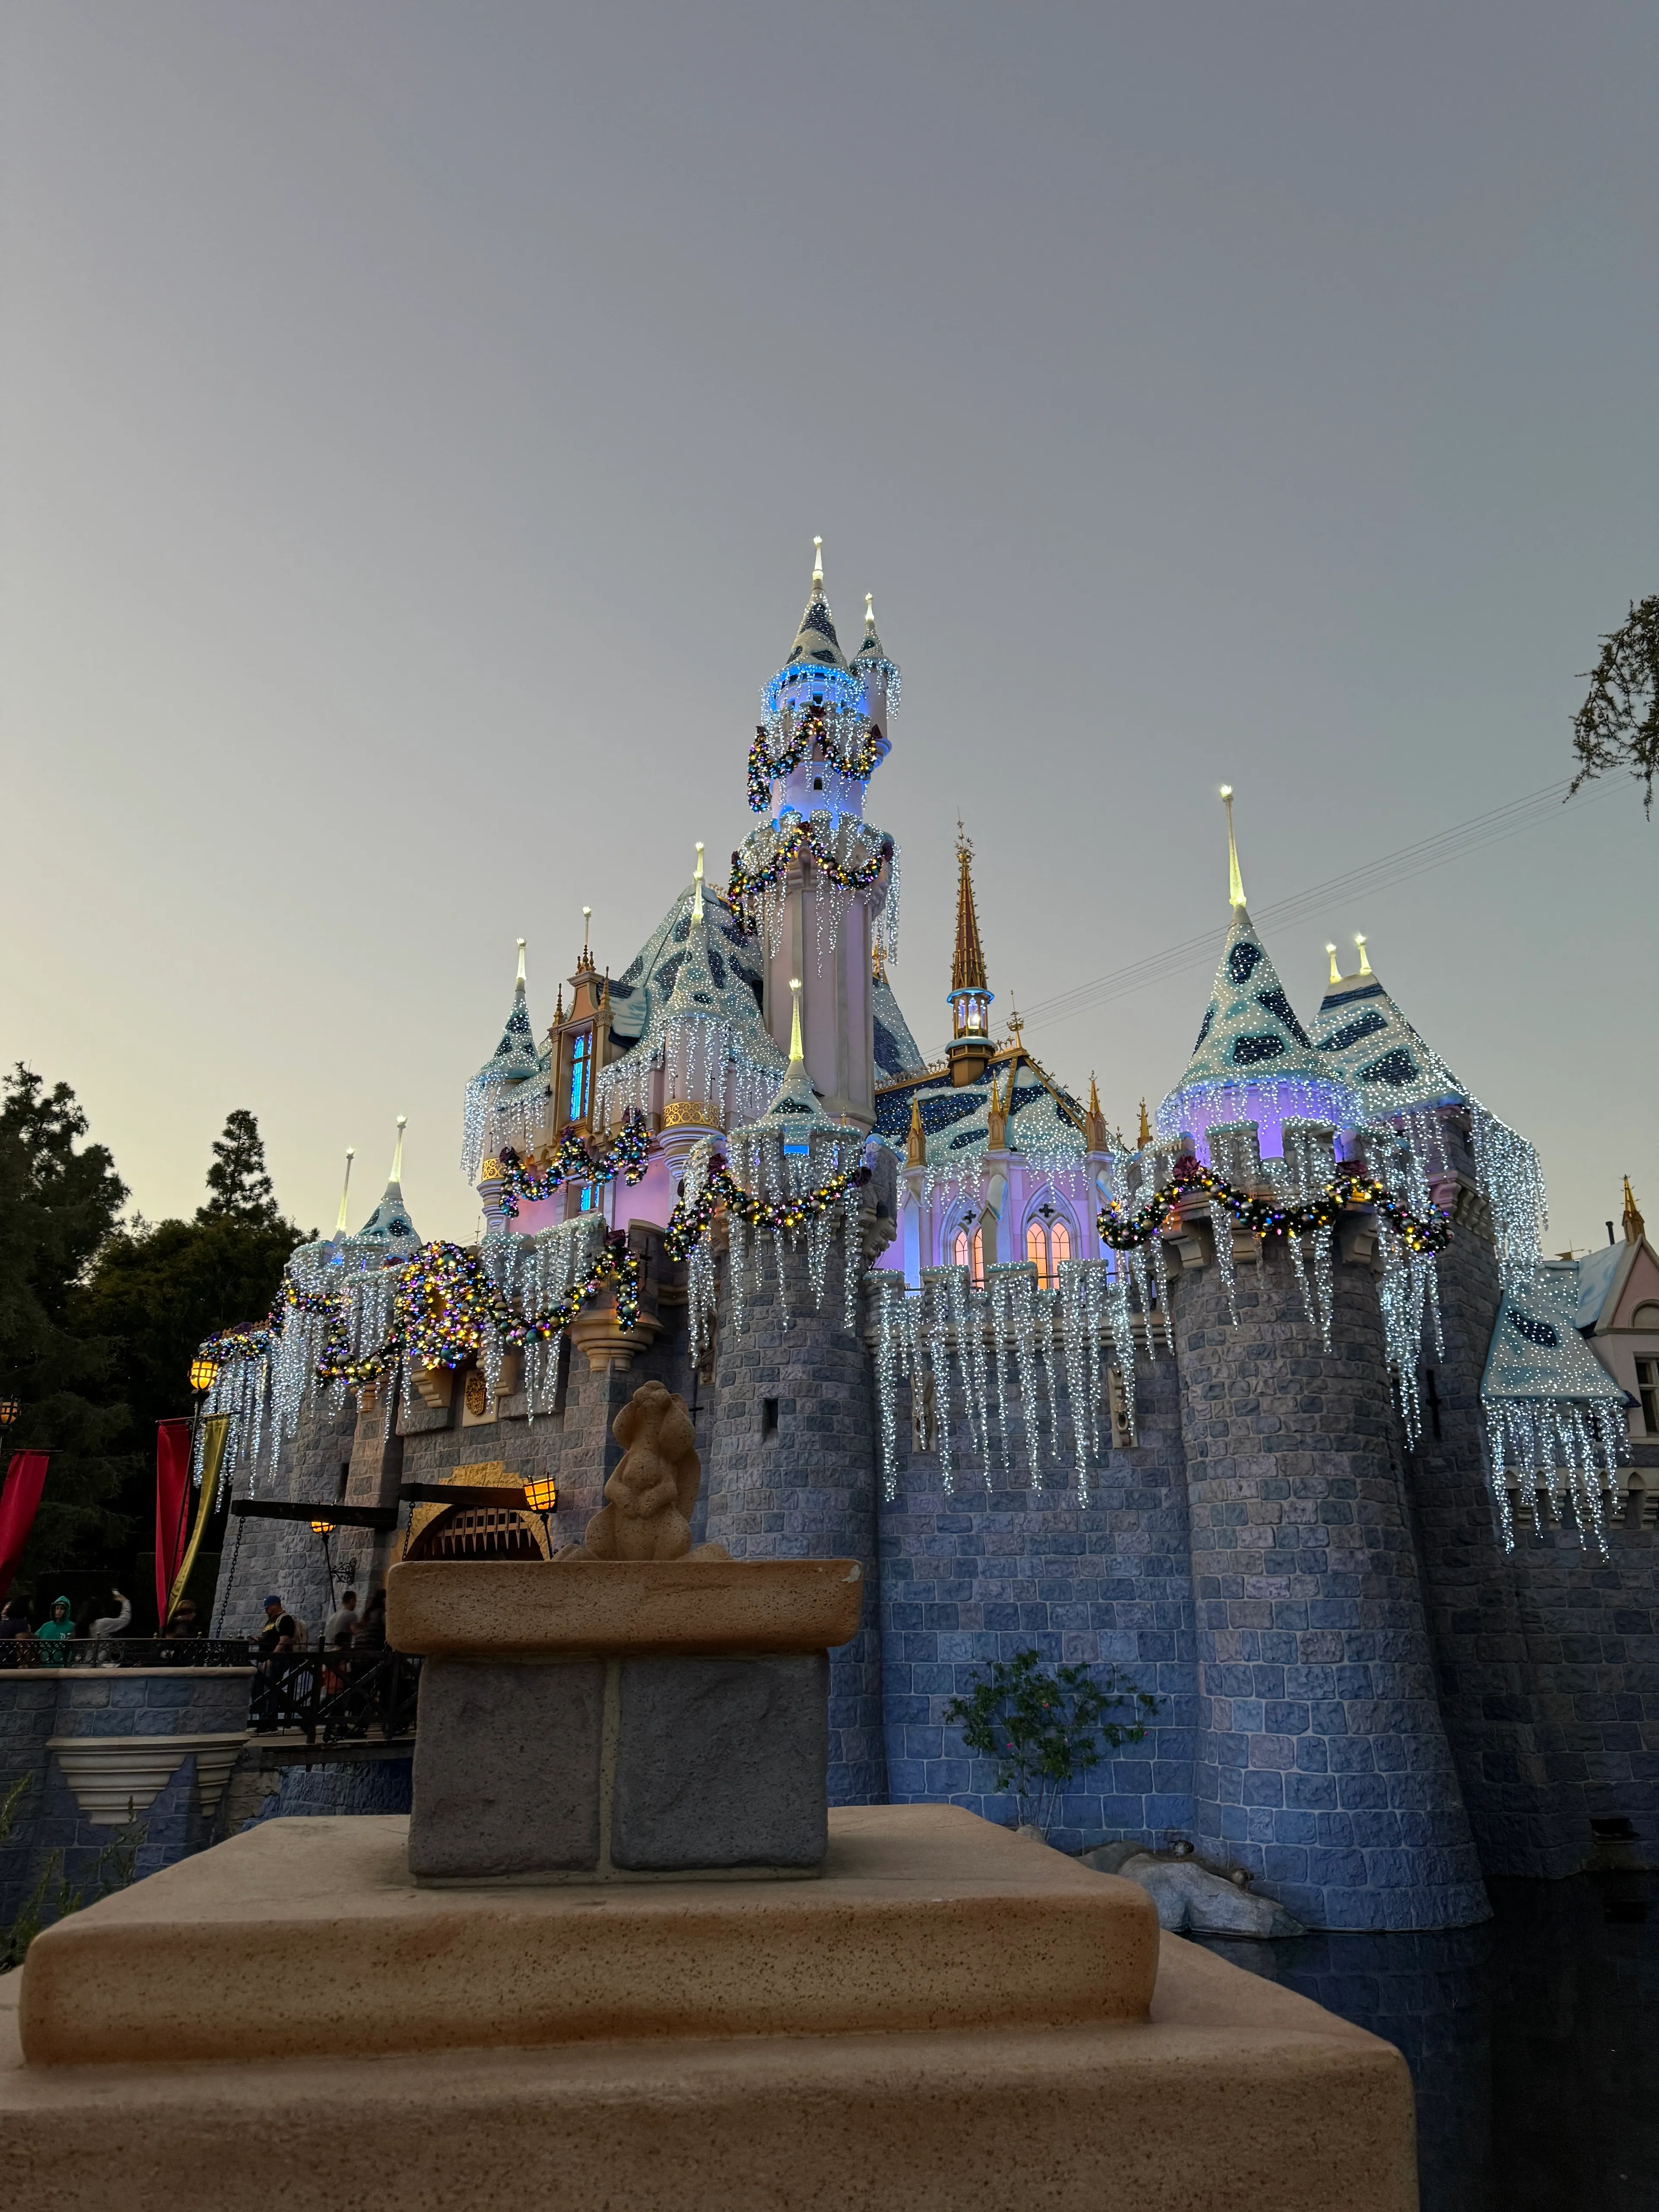 Unedited photo of Sleeping Beauty Castle at Disneyland.